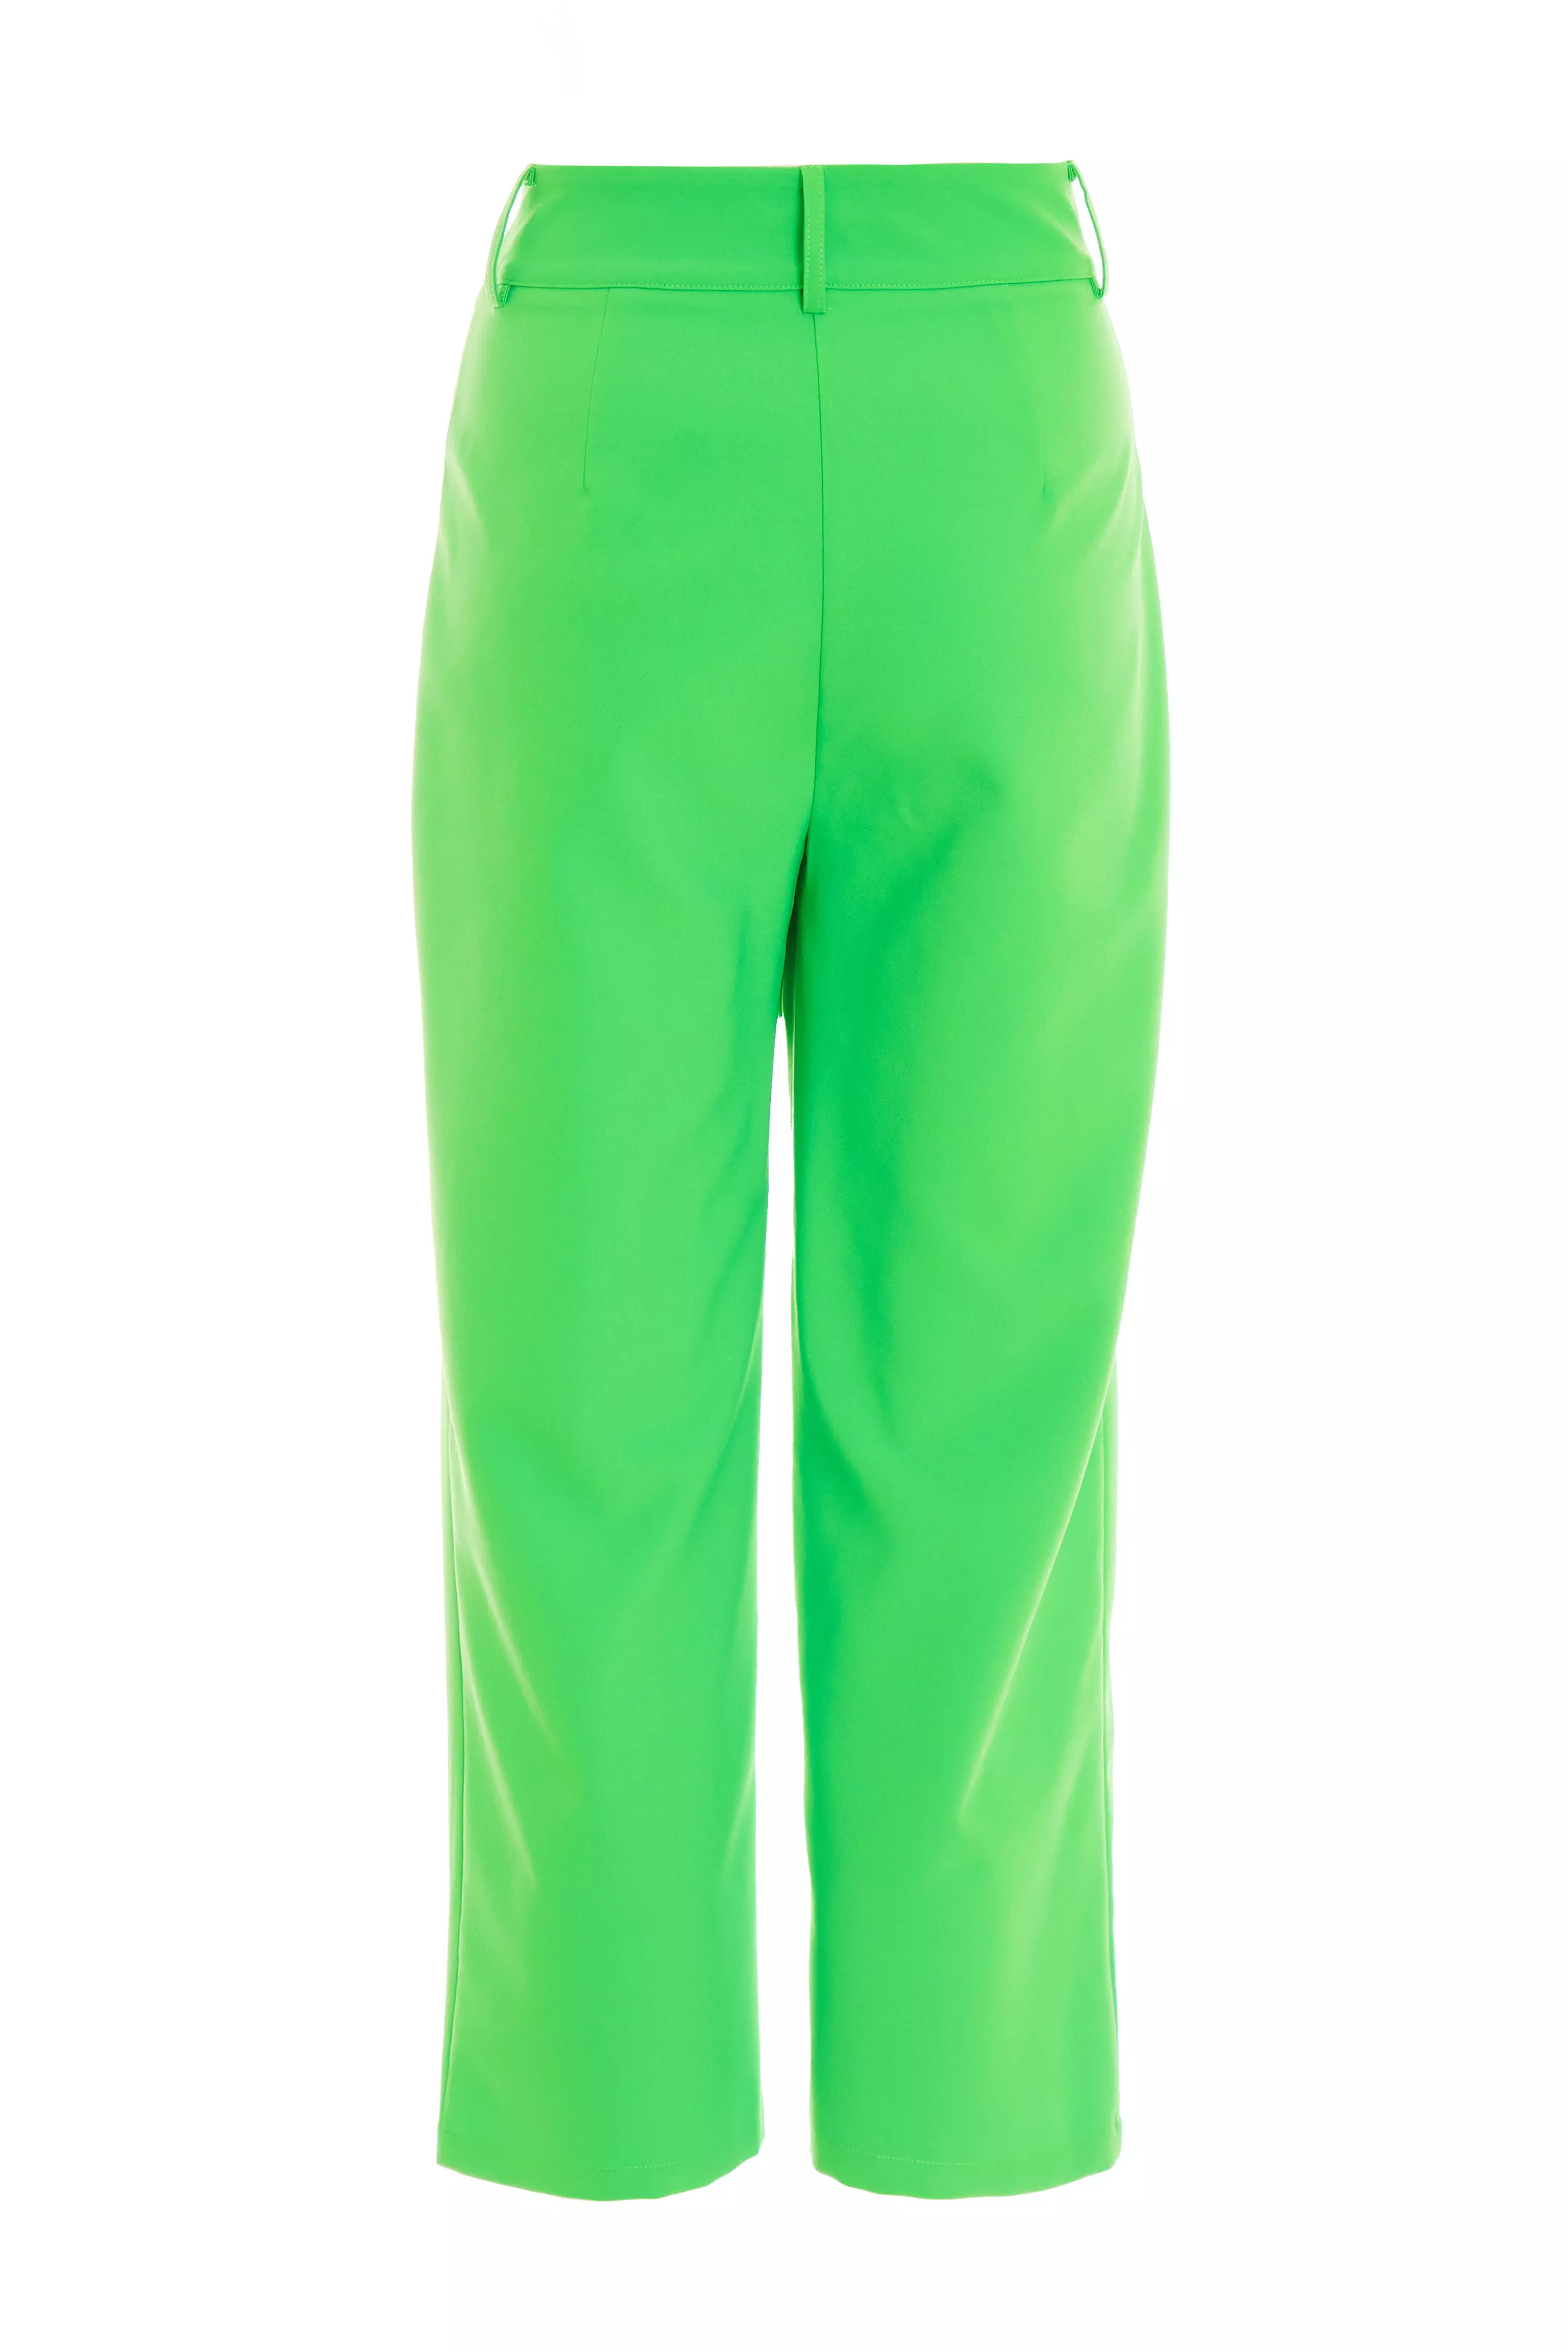 Petite Green High Waist Tailored Trousers